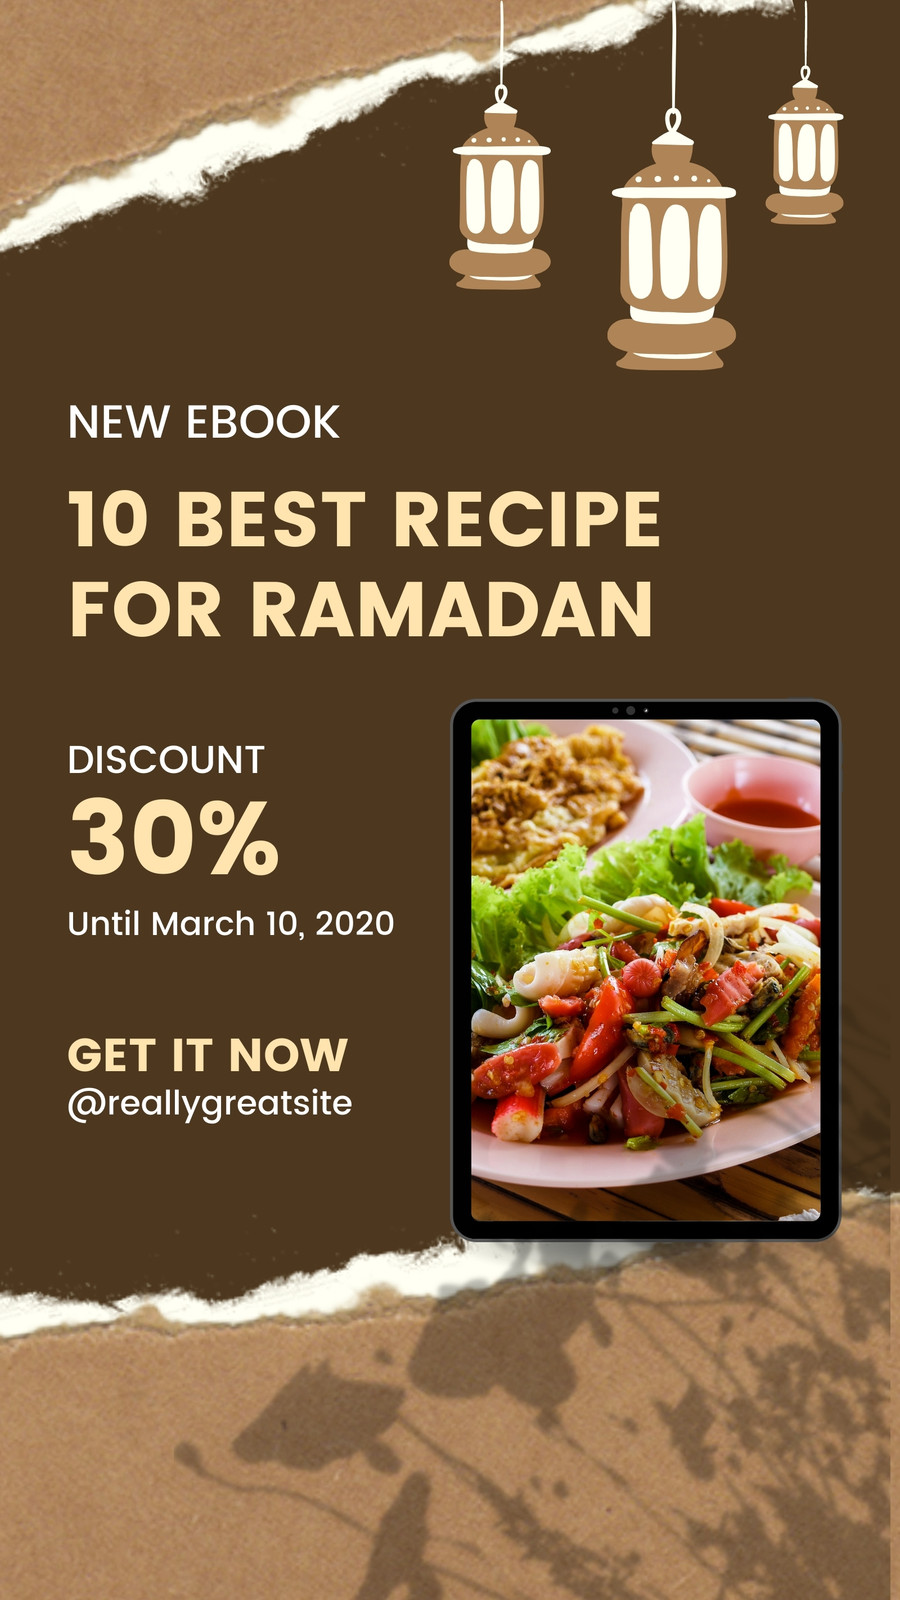 https://marketplace.canva.com/EAE3Kh0UOiM/1/0/900w/canva-islamic-best-recipe-ebook-for-ramadan-instagram-story-DDO9hMl4XC0.jpg